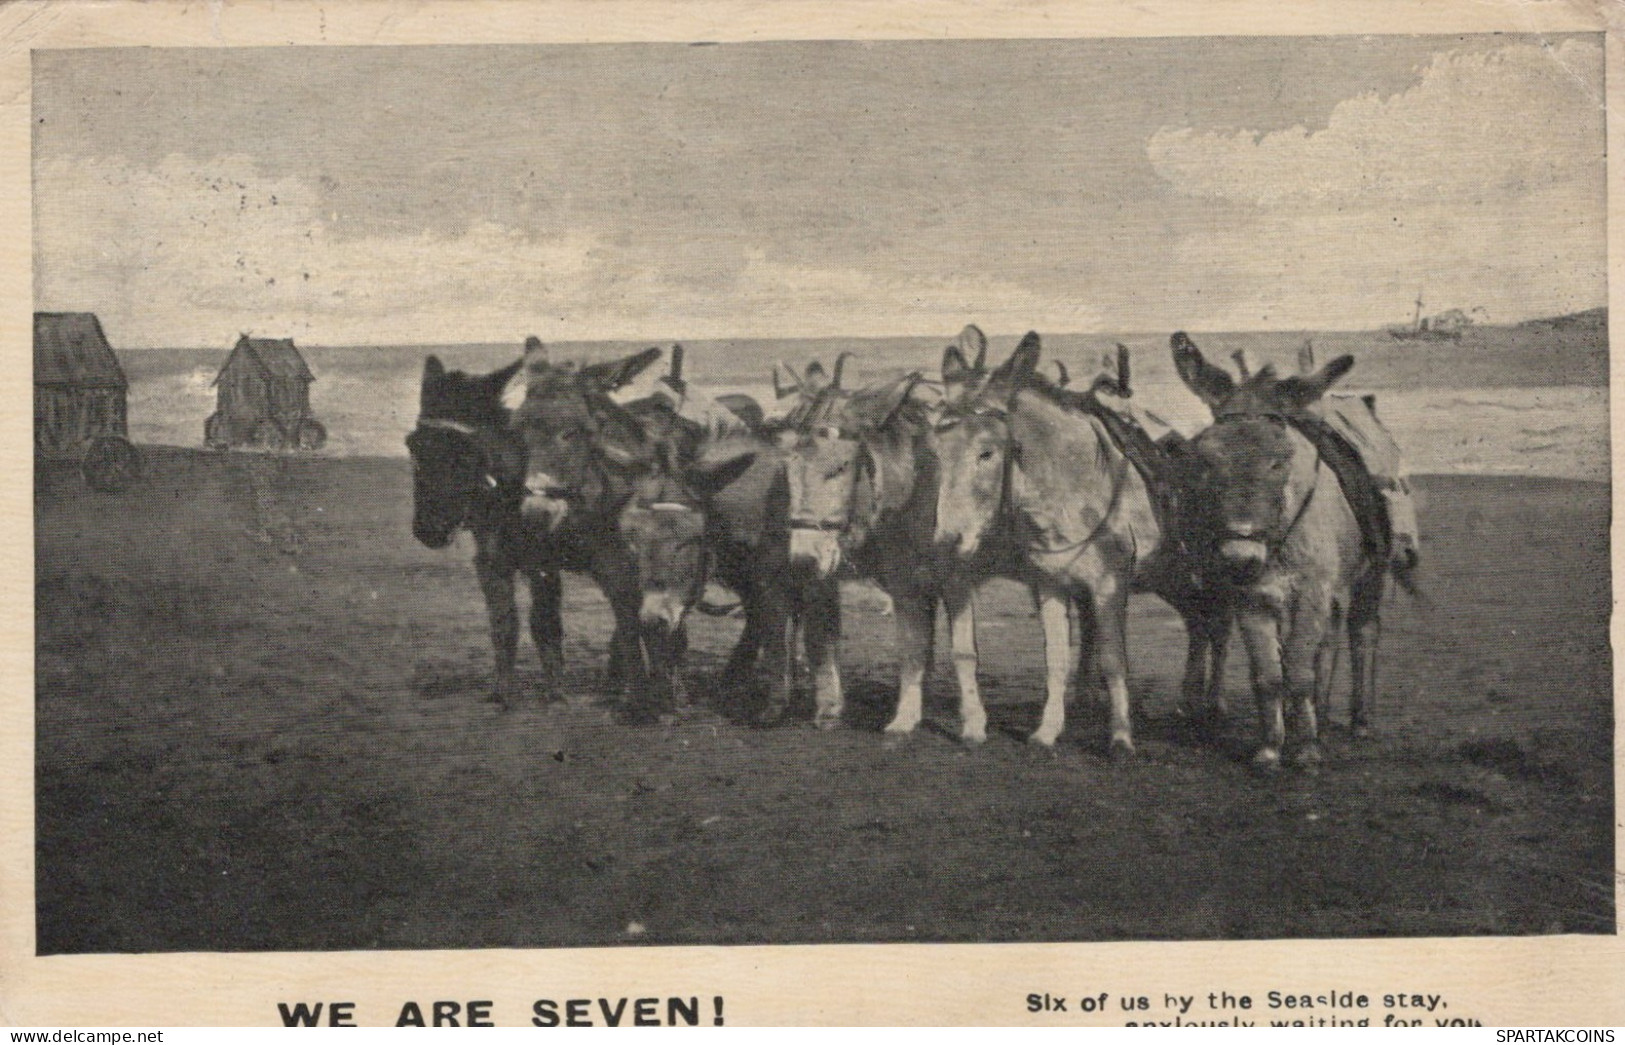 ASINO Animale Vintage CPA Cartolina #PAA207.A - Donkeys